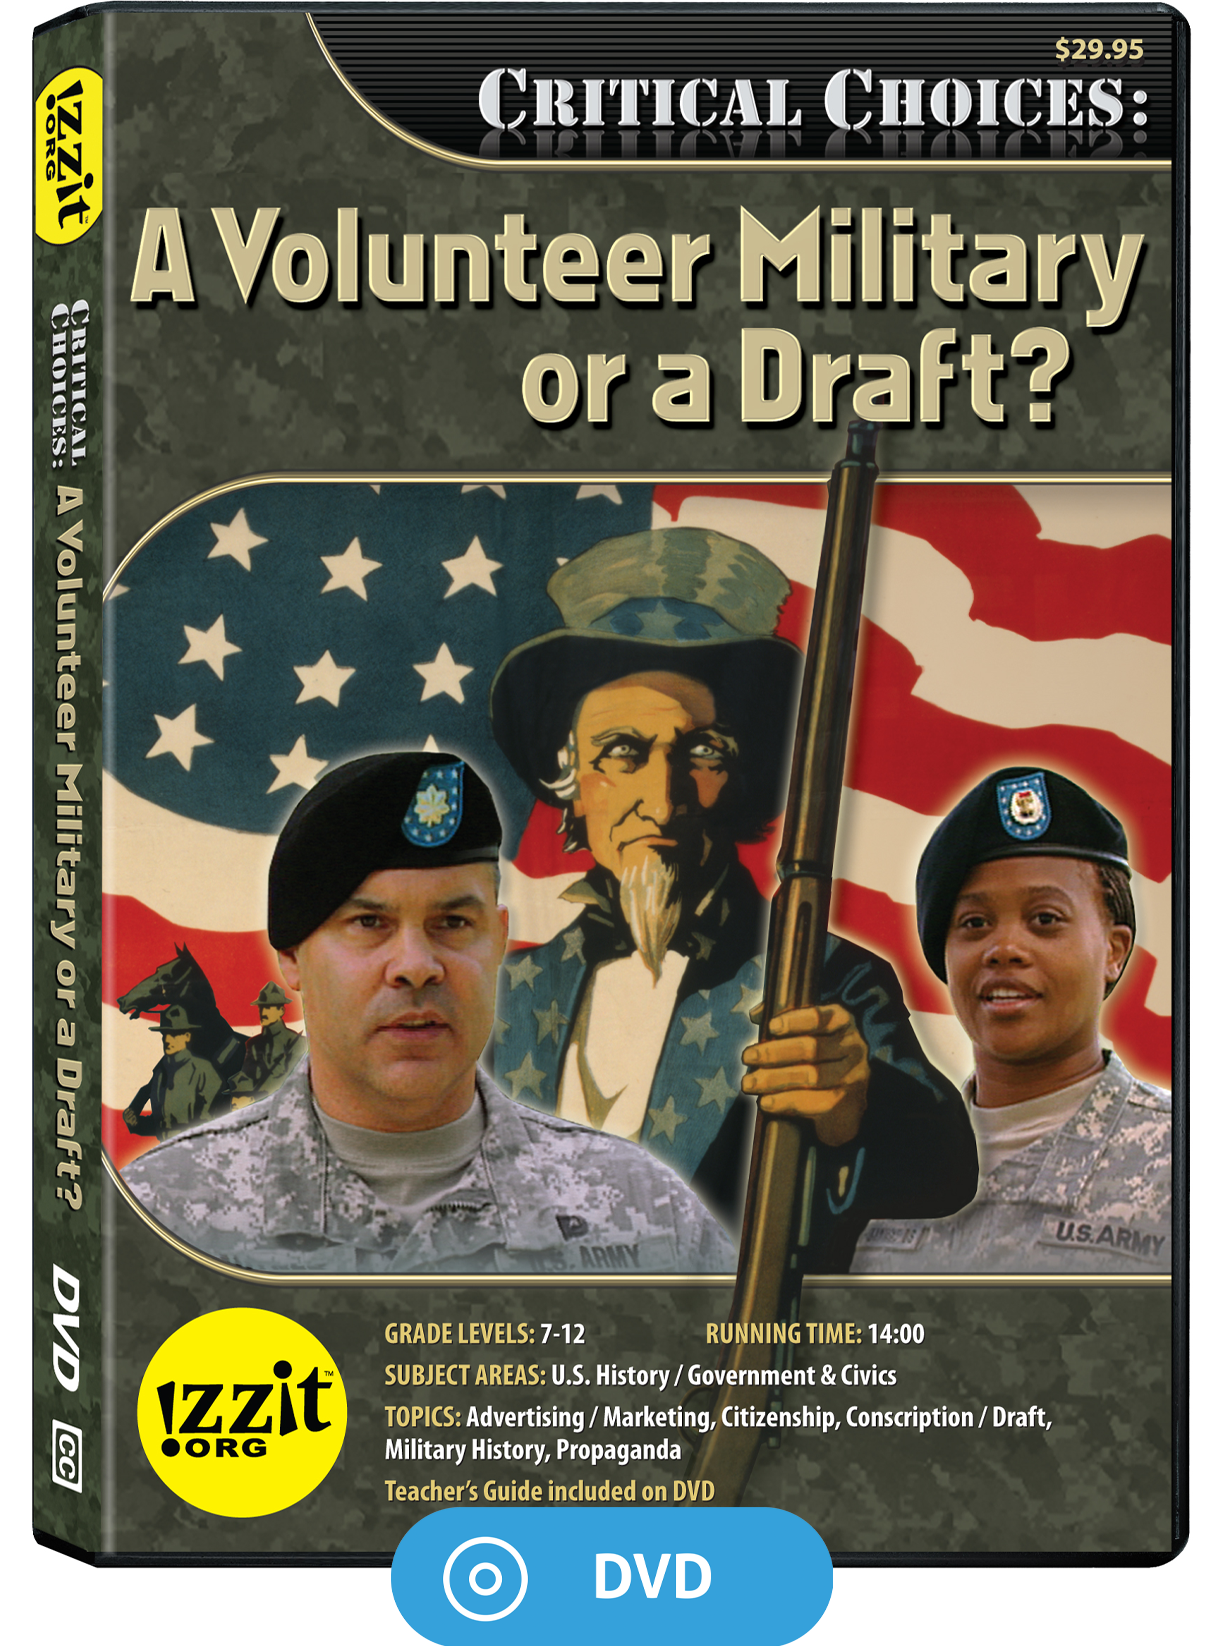 A Volunteer or Military Draft? DVD